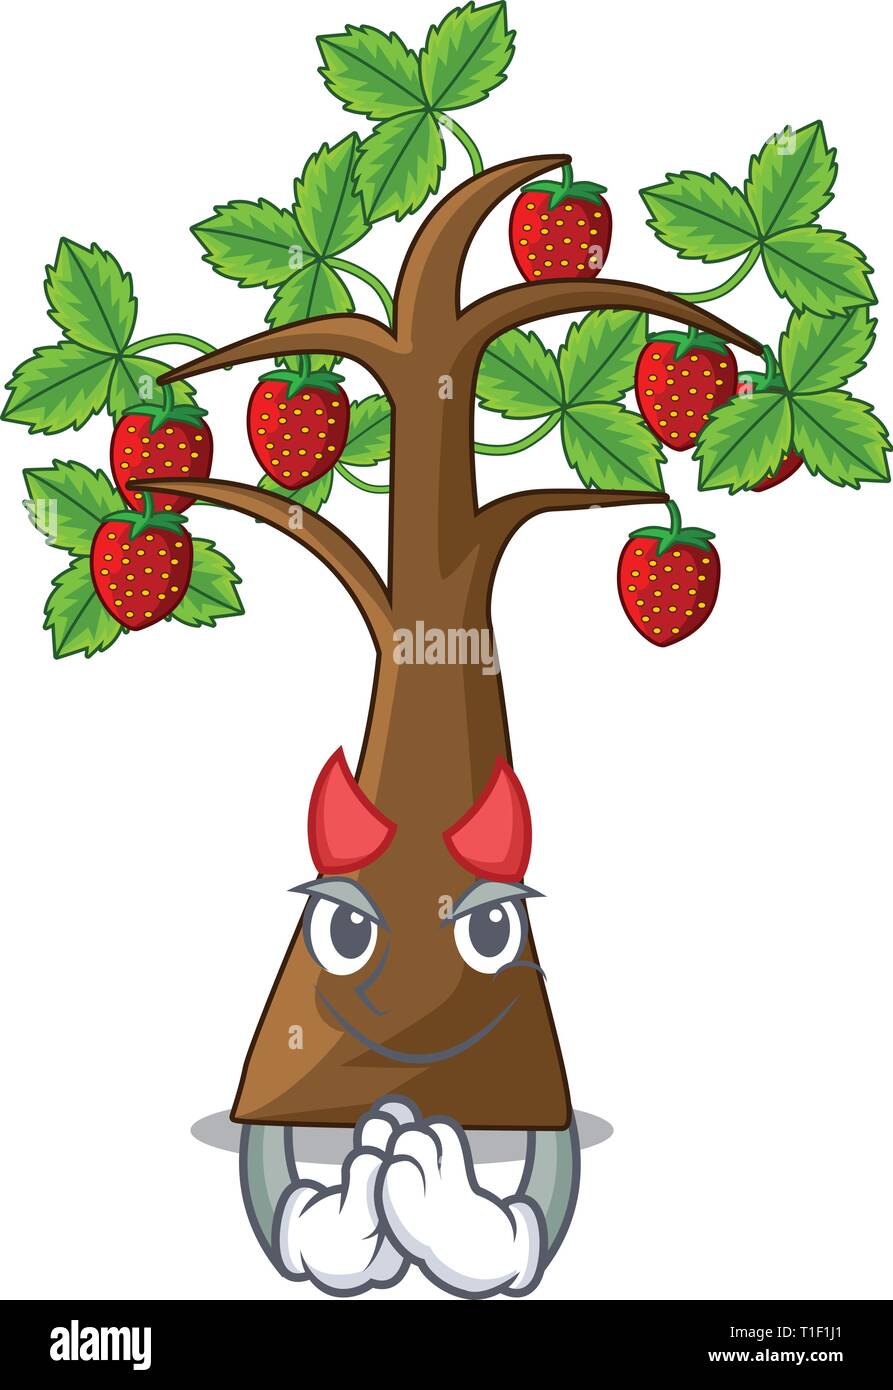 Devil cartoon strawberry trees grow on soil vector illustration Stock Vector